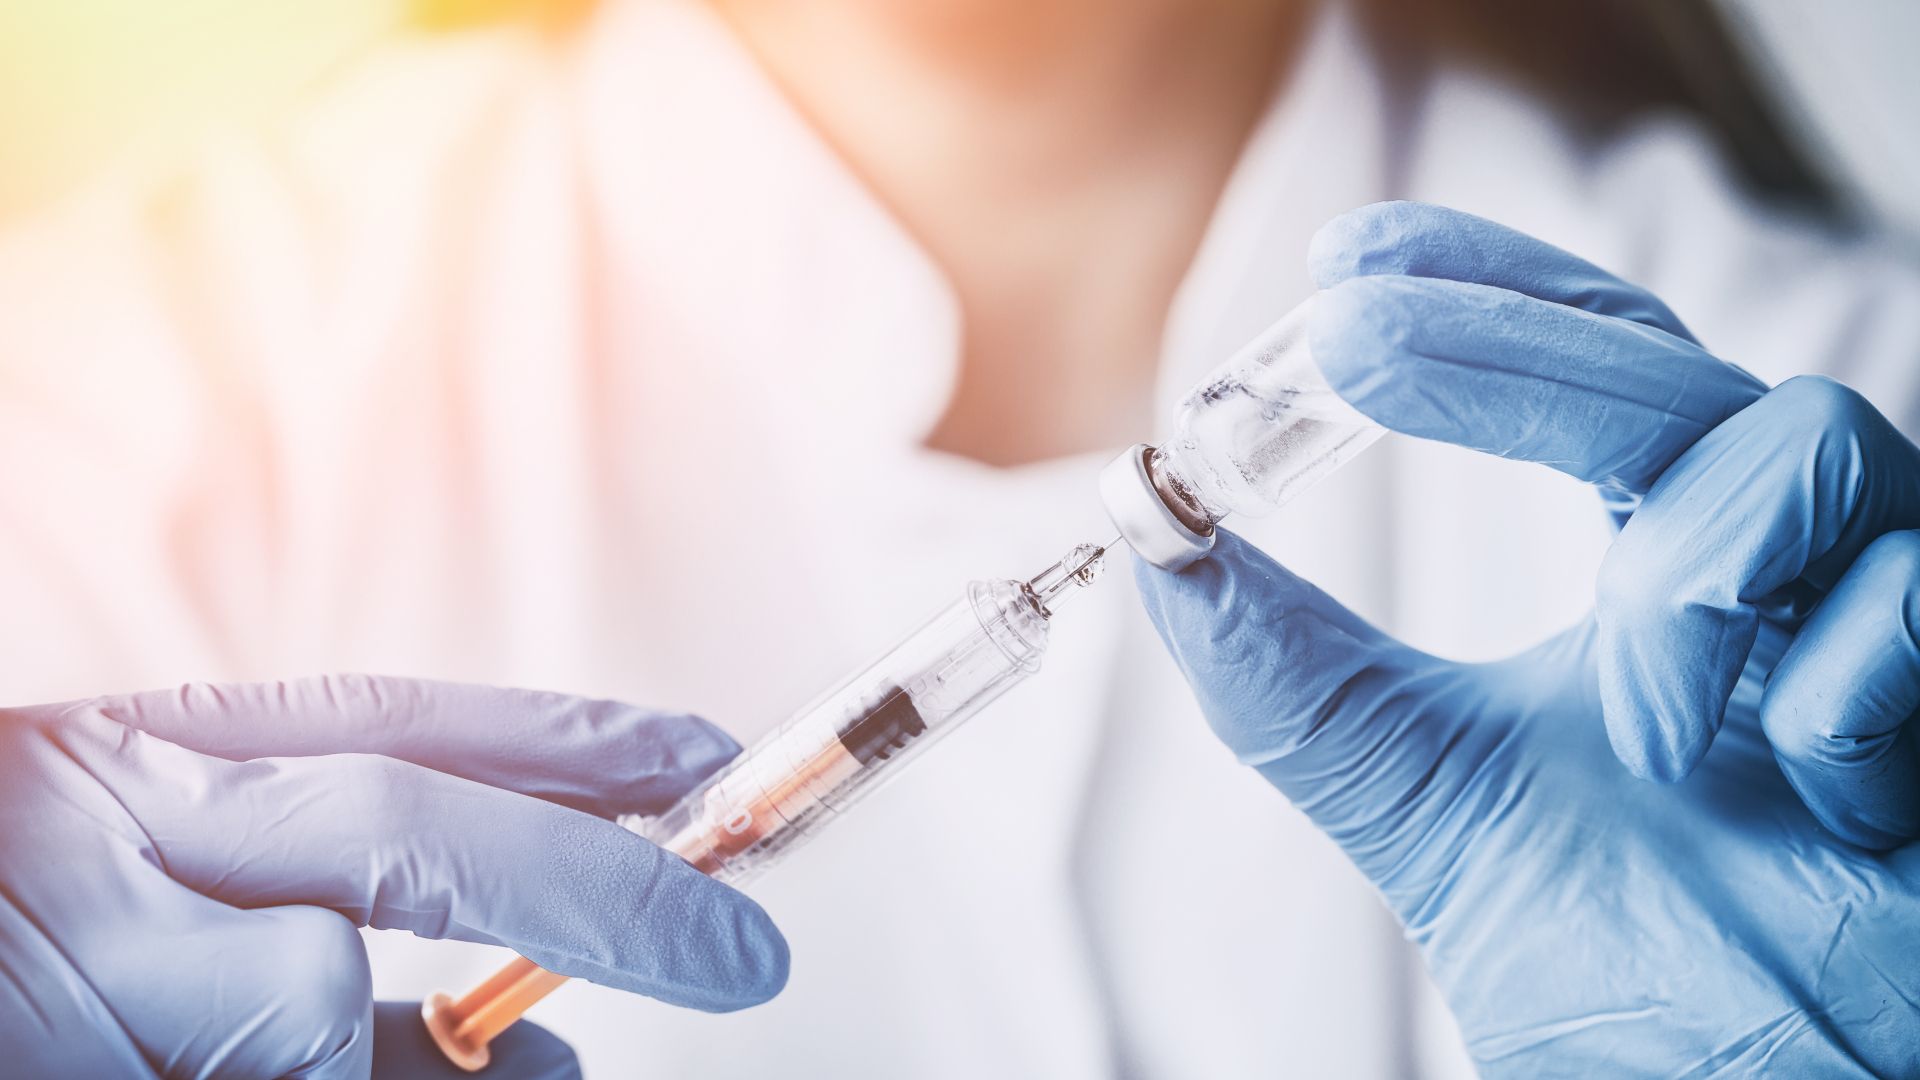 Medic preparing vaccine injection